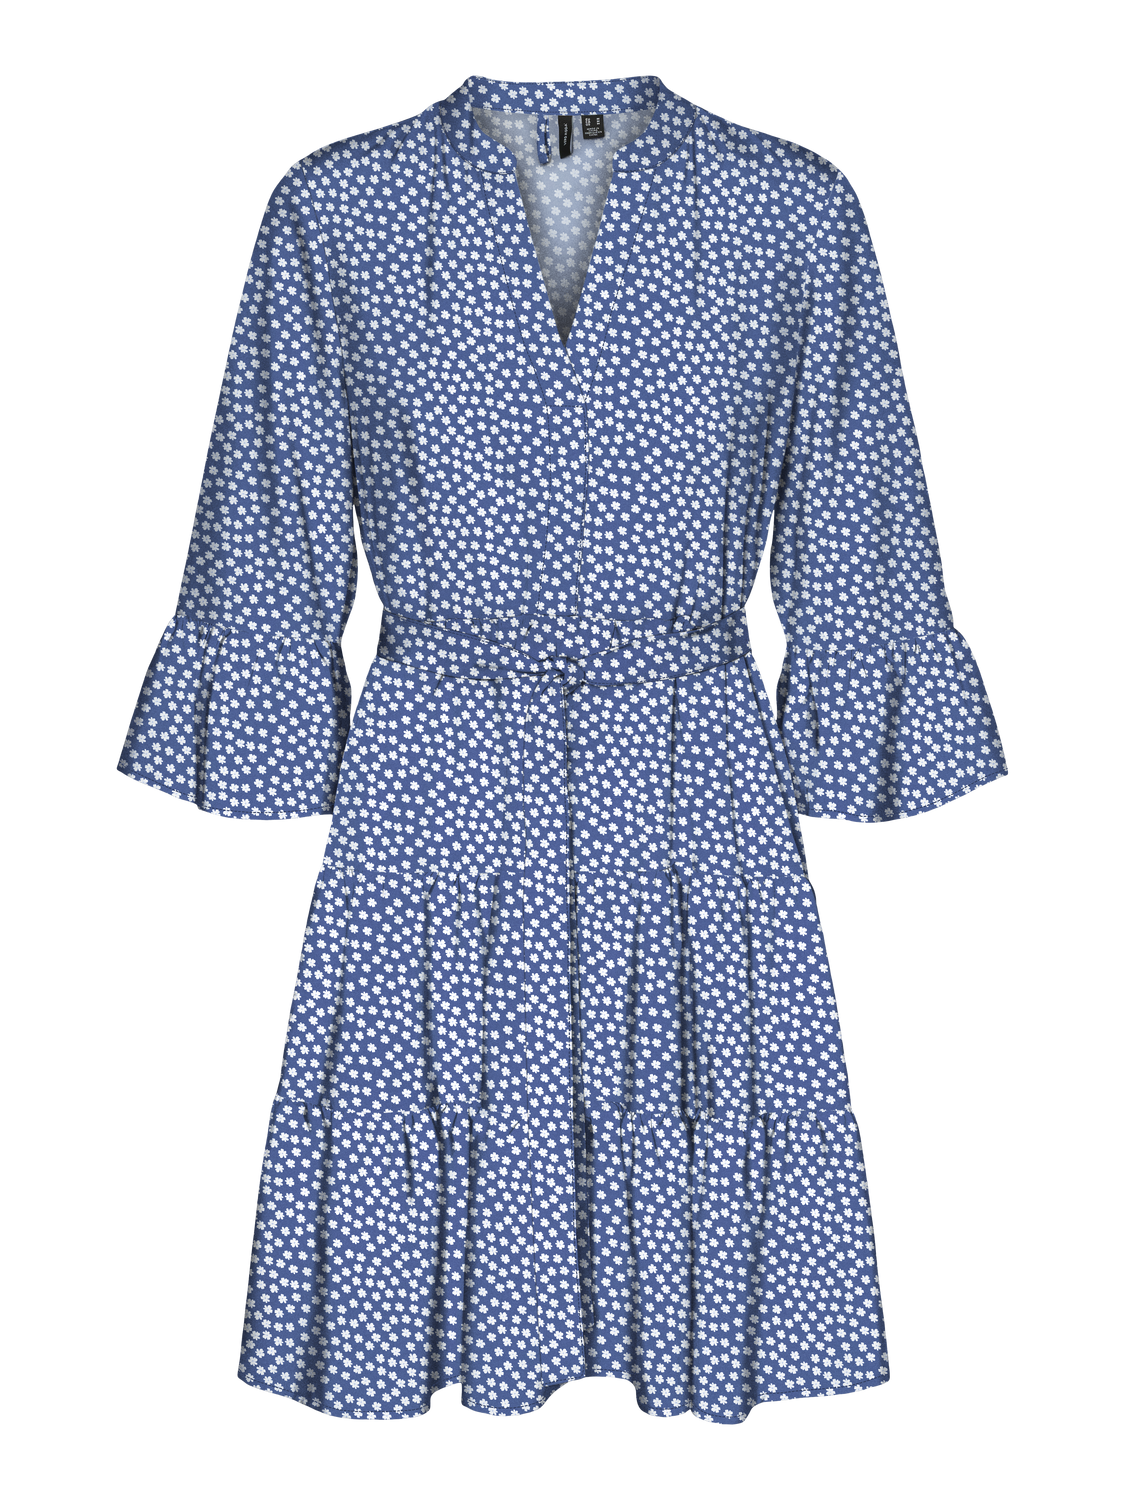 Vero Moda VMZERA Kort kjole -Wedgewood - 10316986